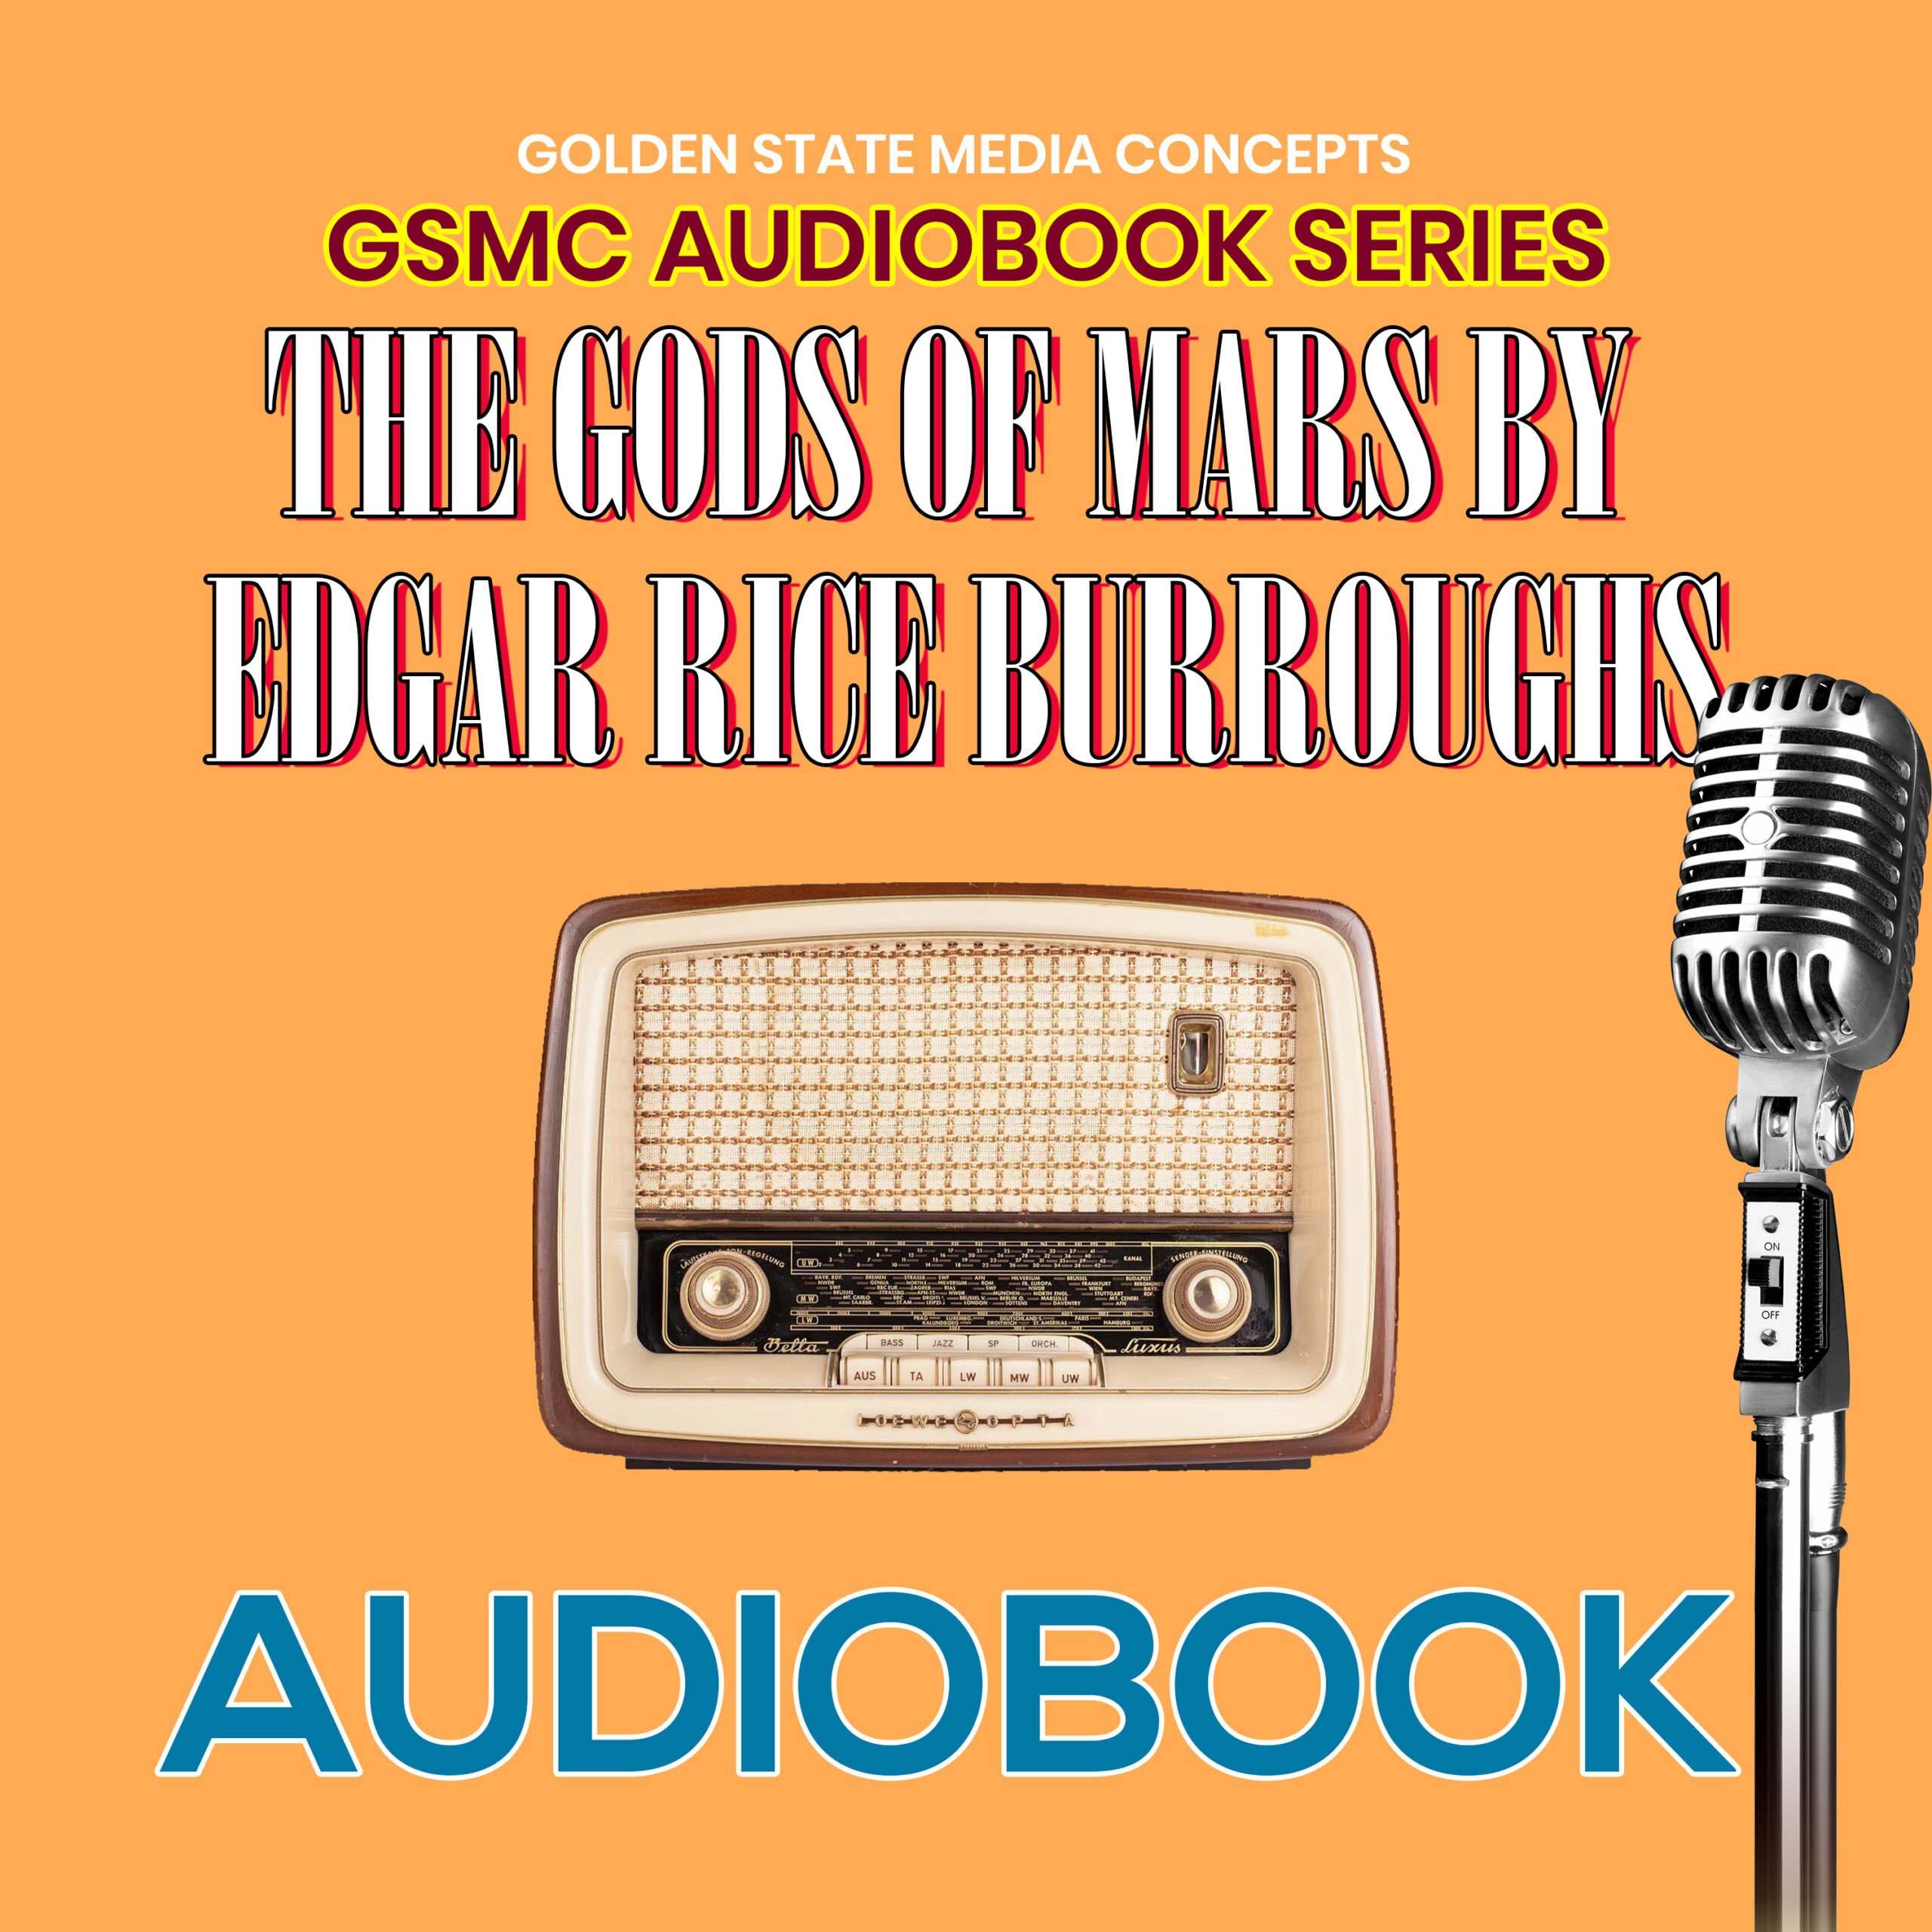 GSMC Audiobook Series: The Gods of Mars by Edgar Rice Burroughs